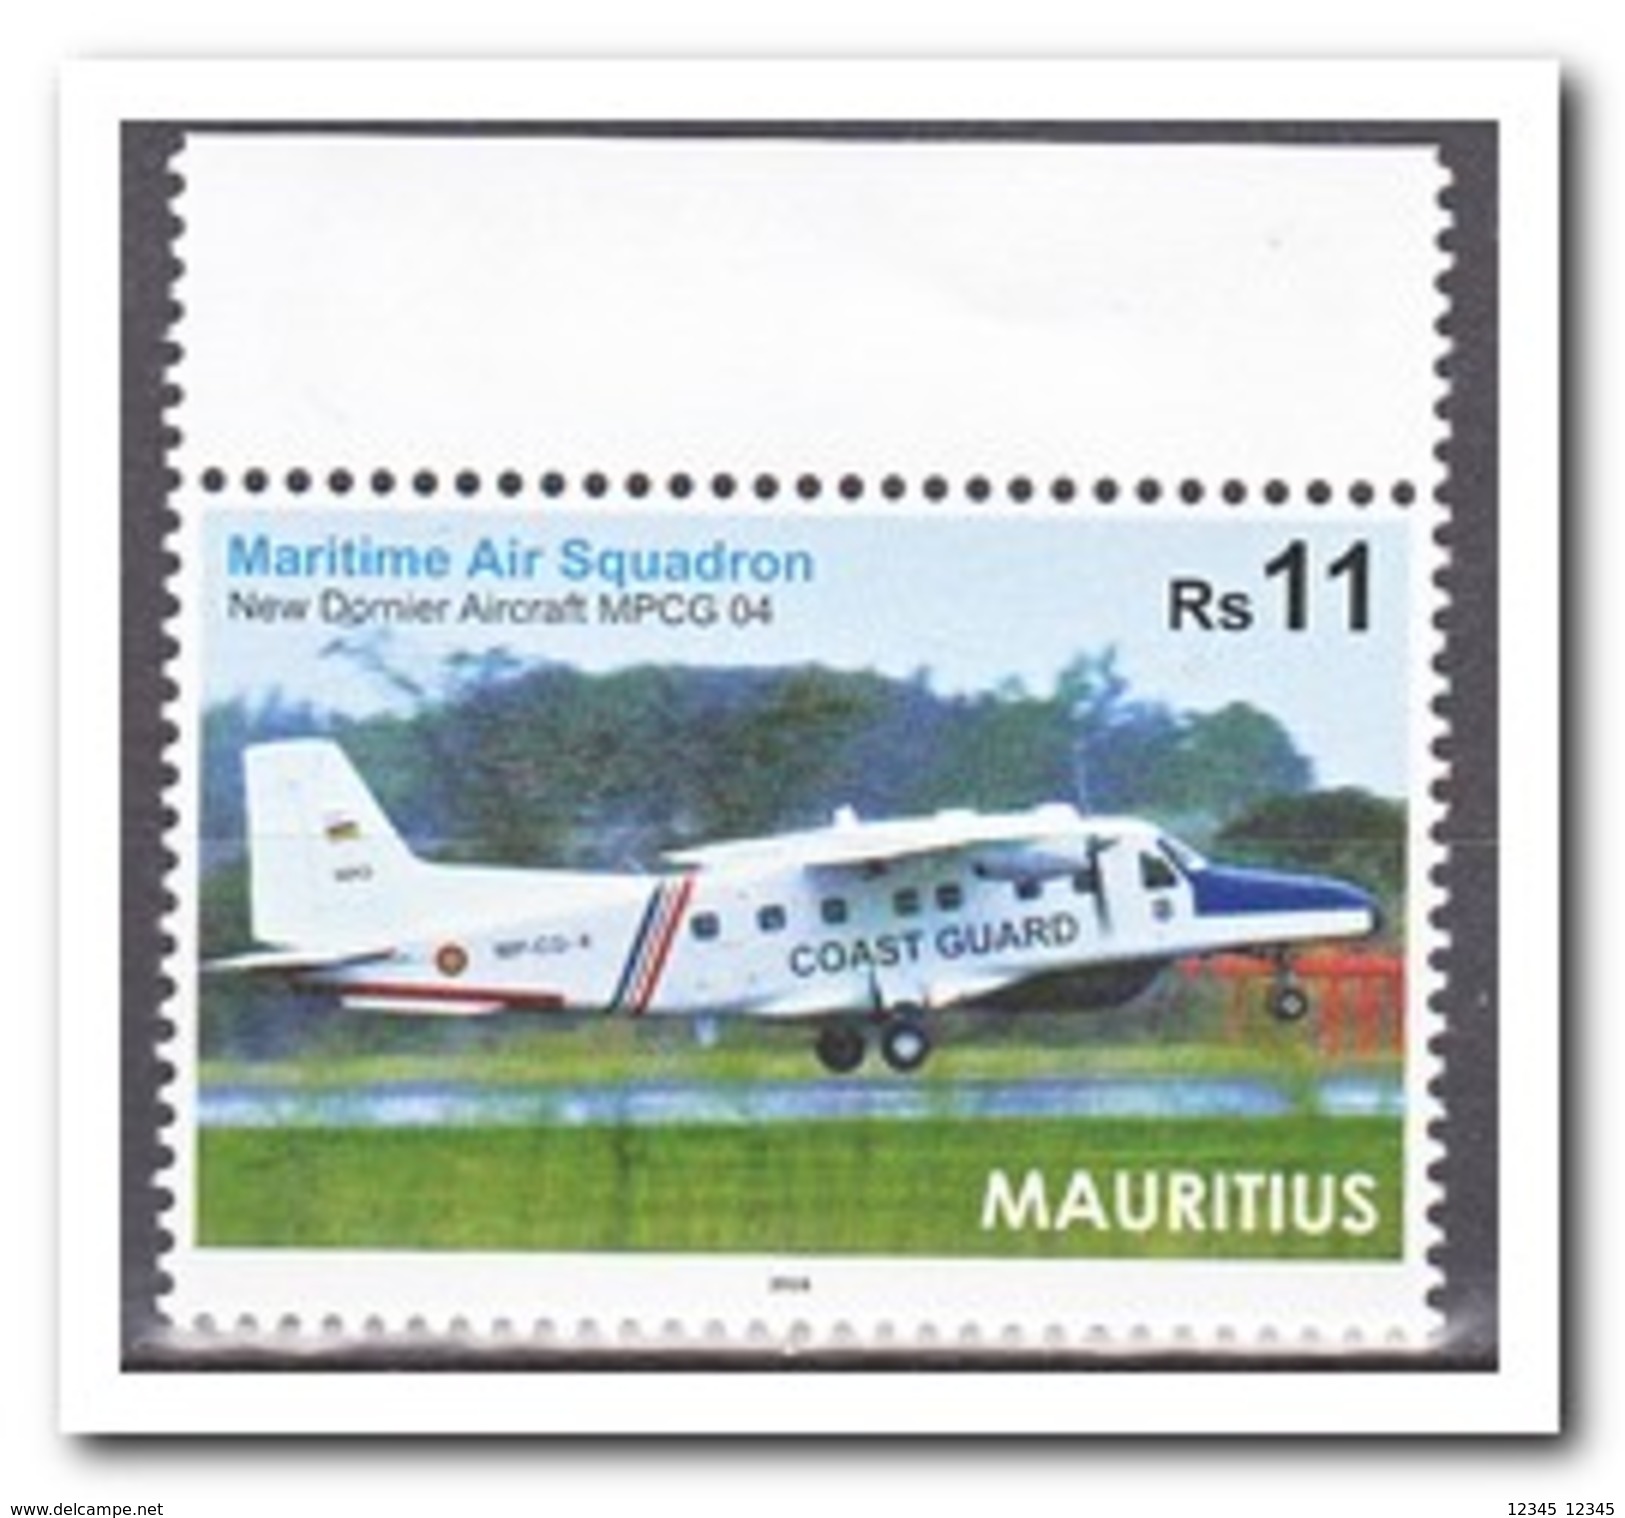 Mauritius 2017, Postfris MNH, Aeroplane - Mauritius (1968-...)